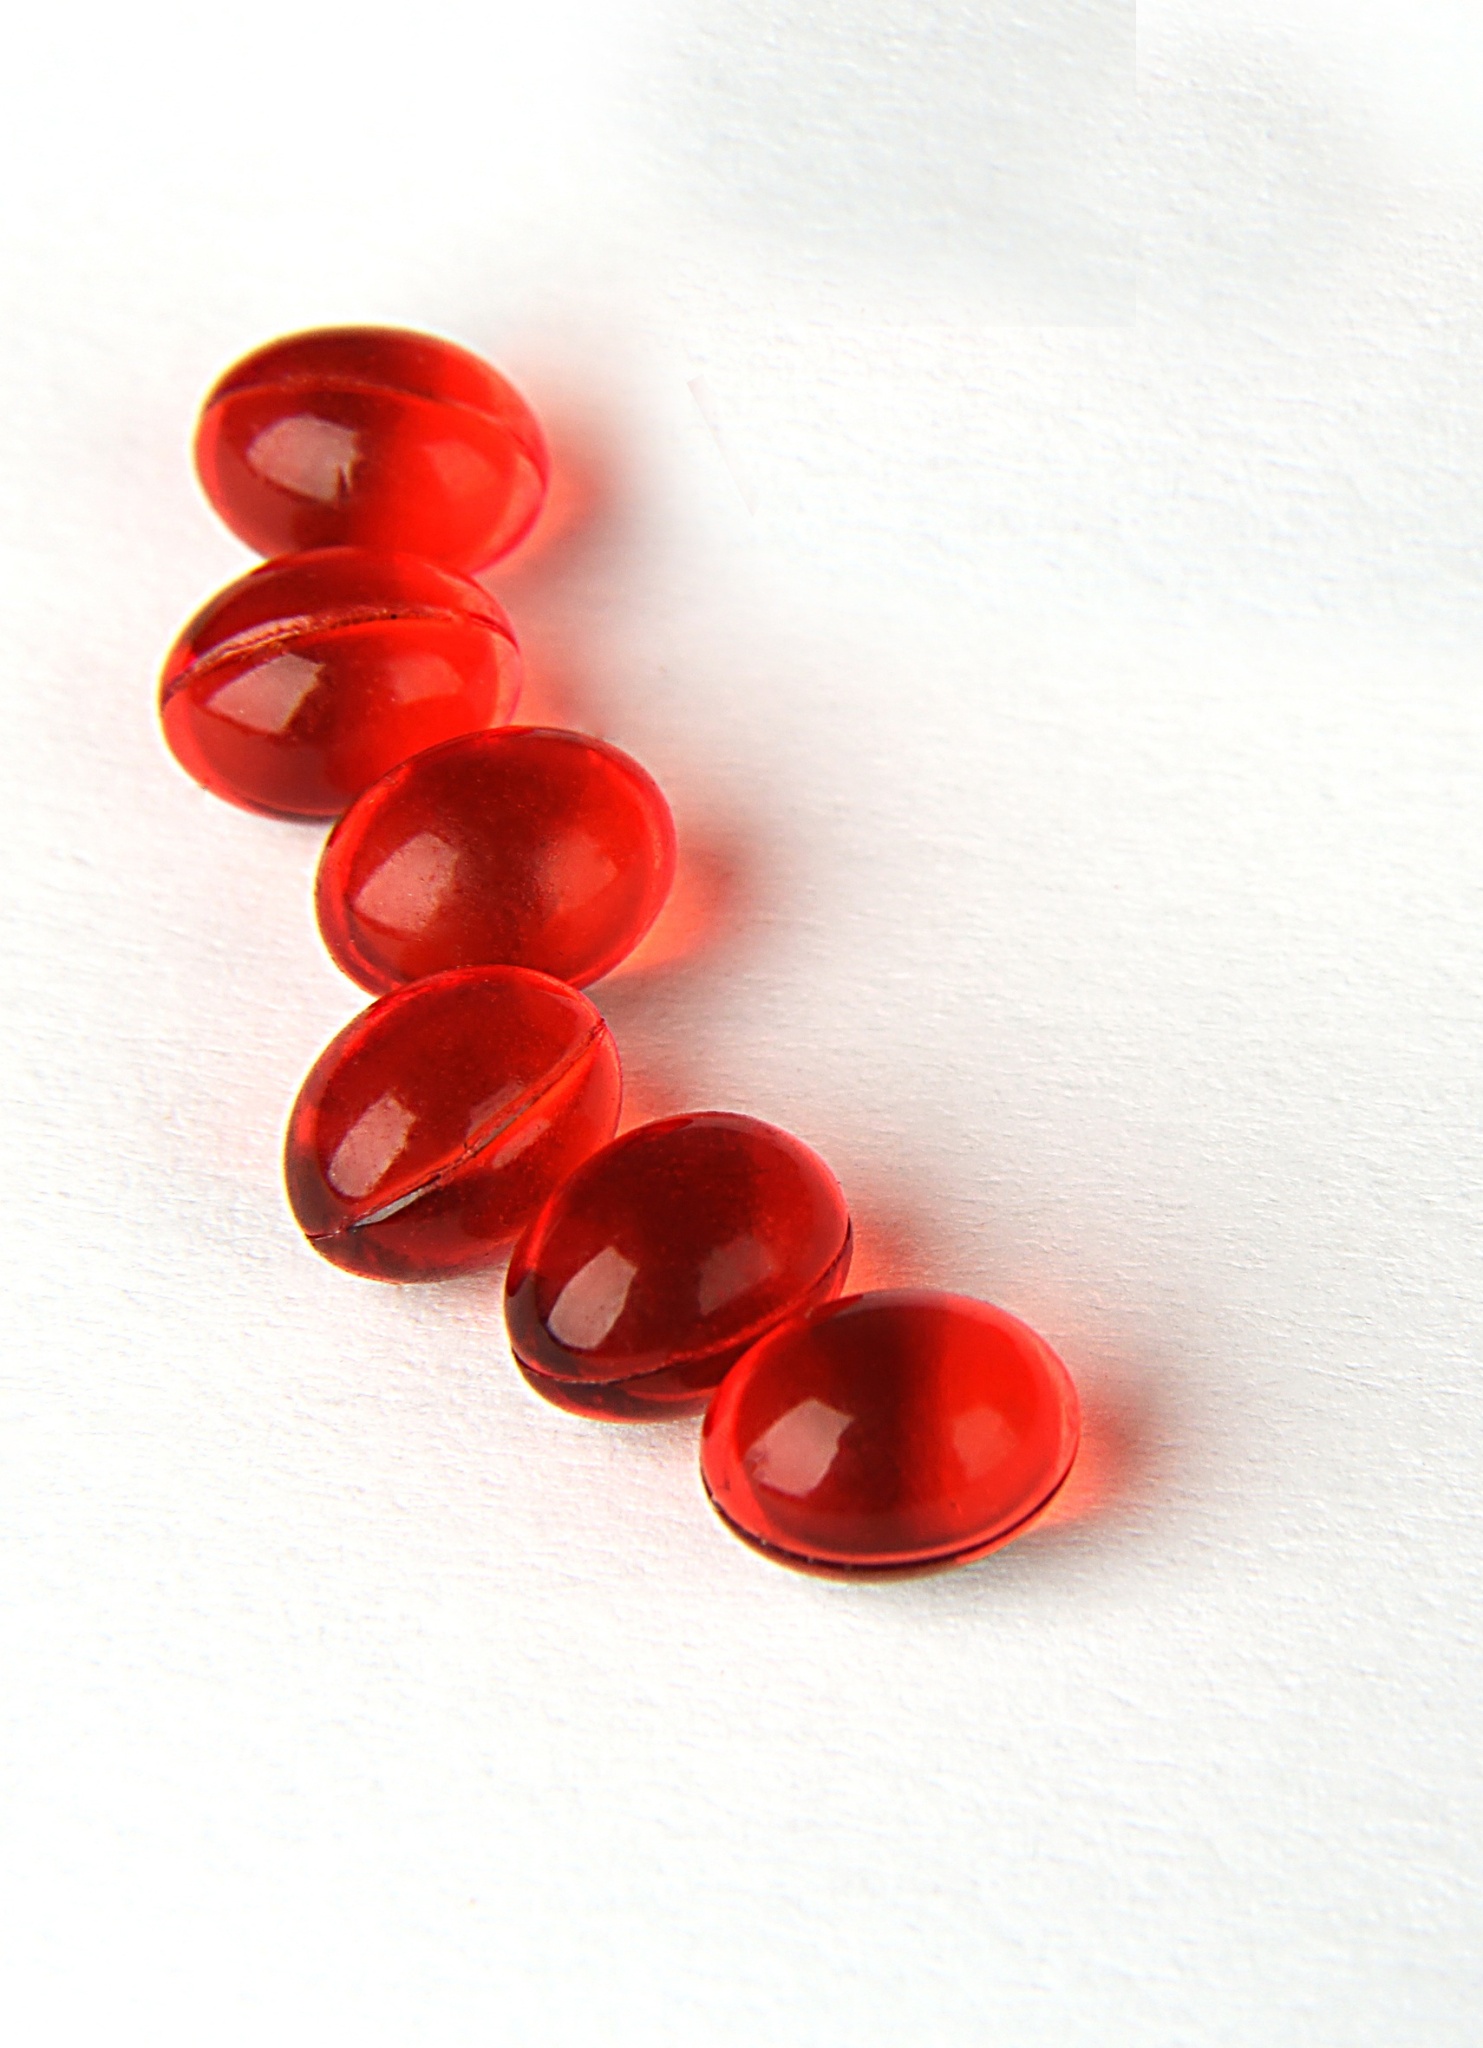 petal-heart-red-medicine-bead-health-698550-pxhere.com.jpg